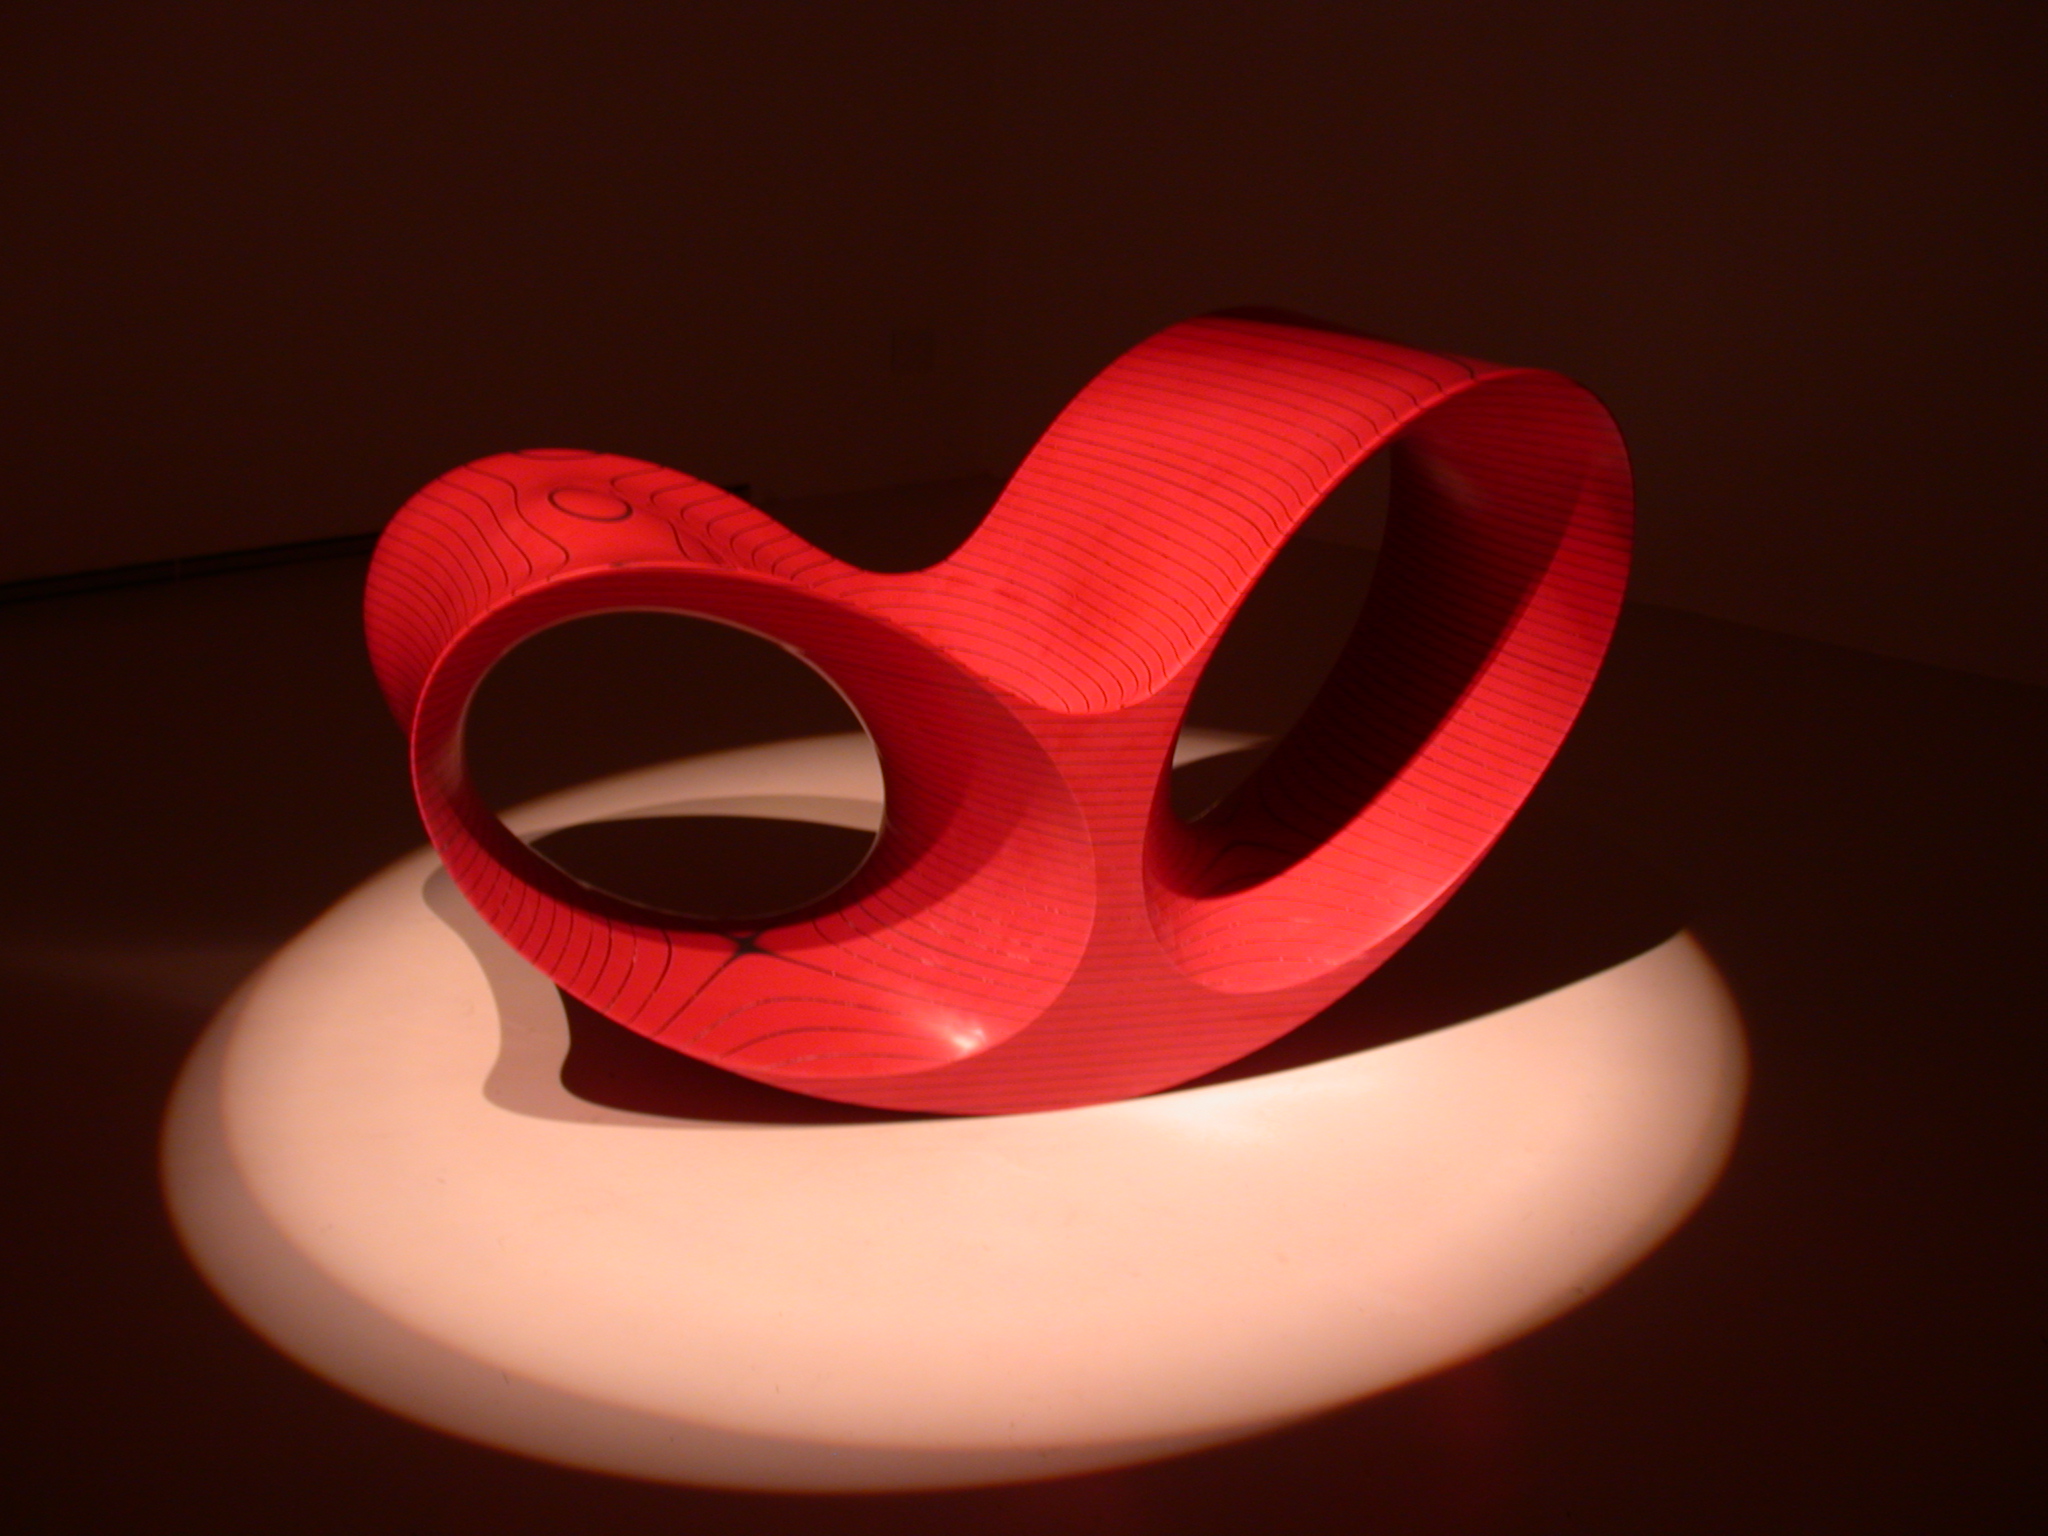 art sculpture red in a beam of light exposition